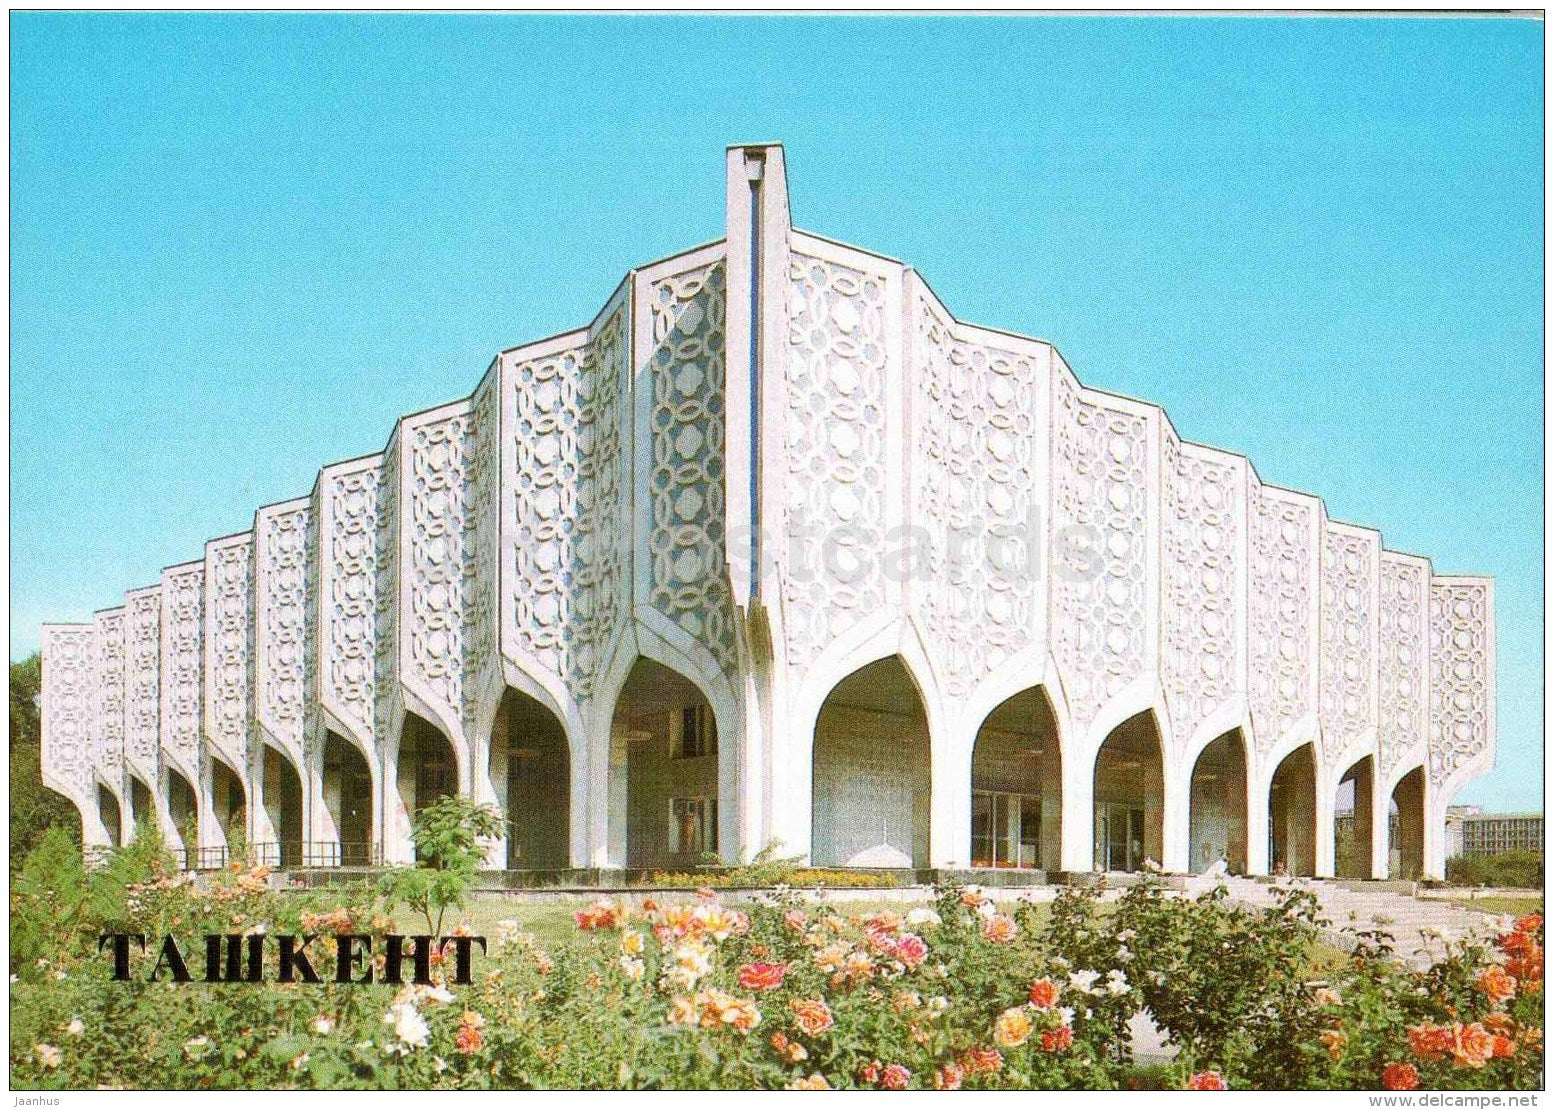 Exhibition Hall of the Uzbek Artise Union - Tashkent - 1986 - Uzbekistan USSR - unused - JH Postcards